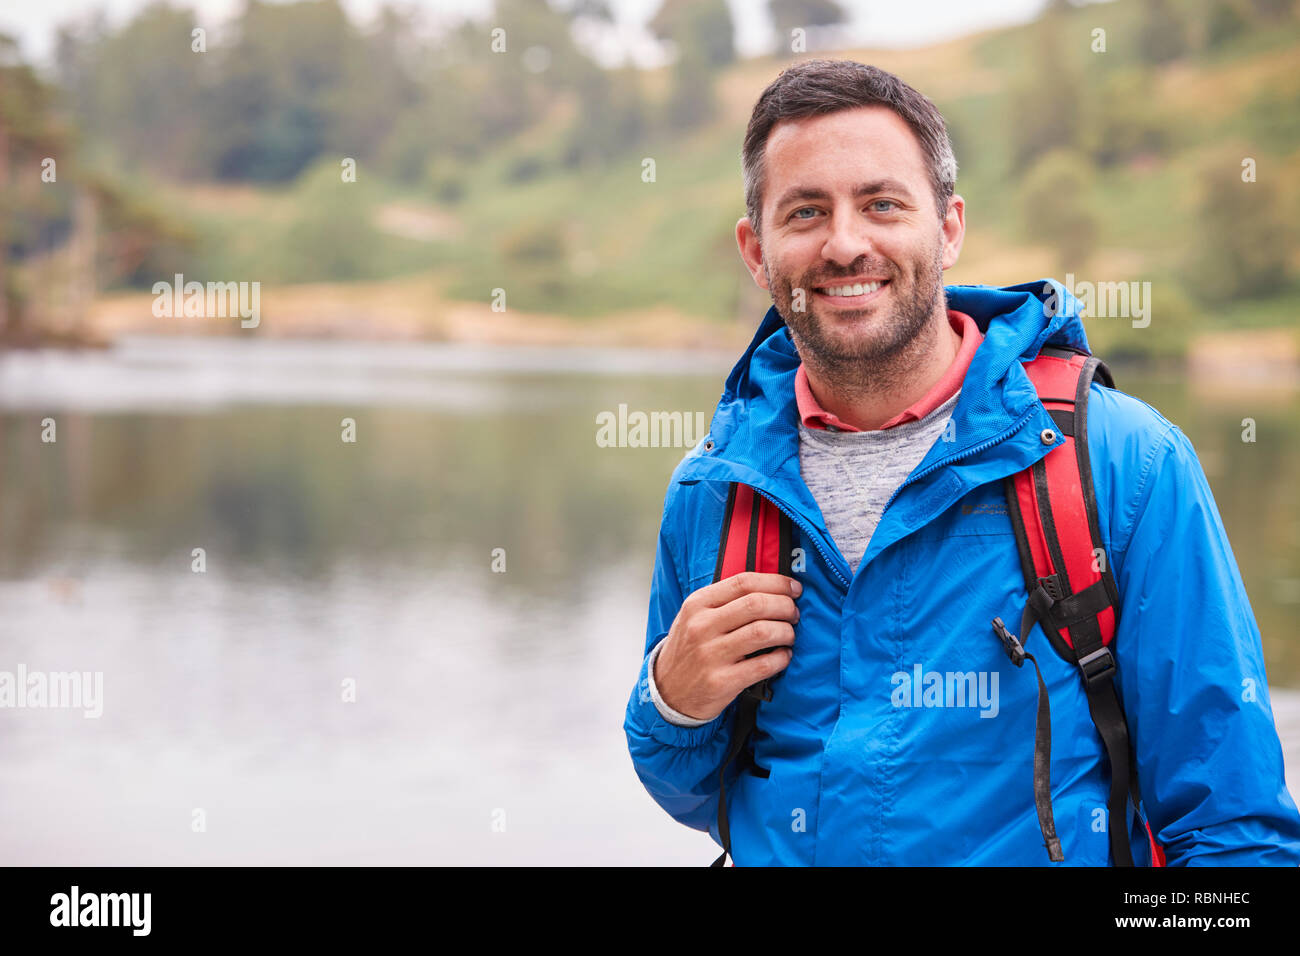 Homme adulte sur un camping appartement de standing by a lake smiling to camera, portrait, Lake District, UK Banque D'Images